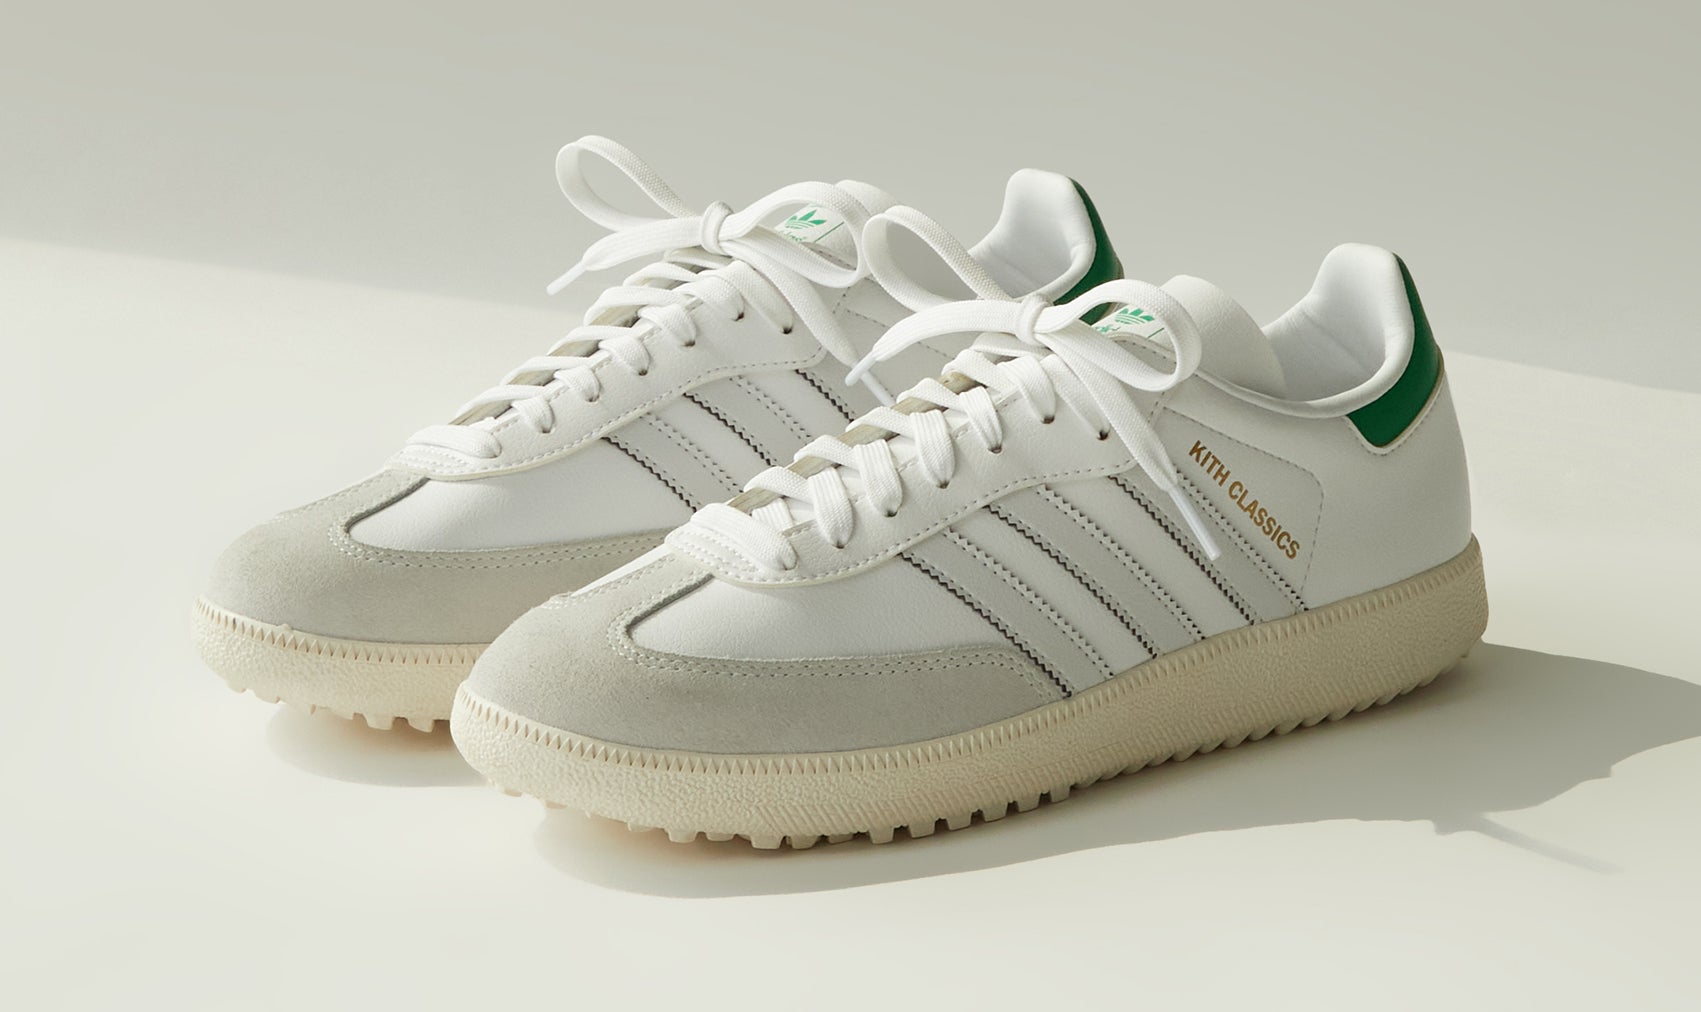 Kith x Adidas Samba Golf Shoe White Green Release Date Pair